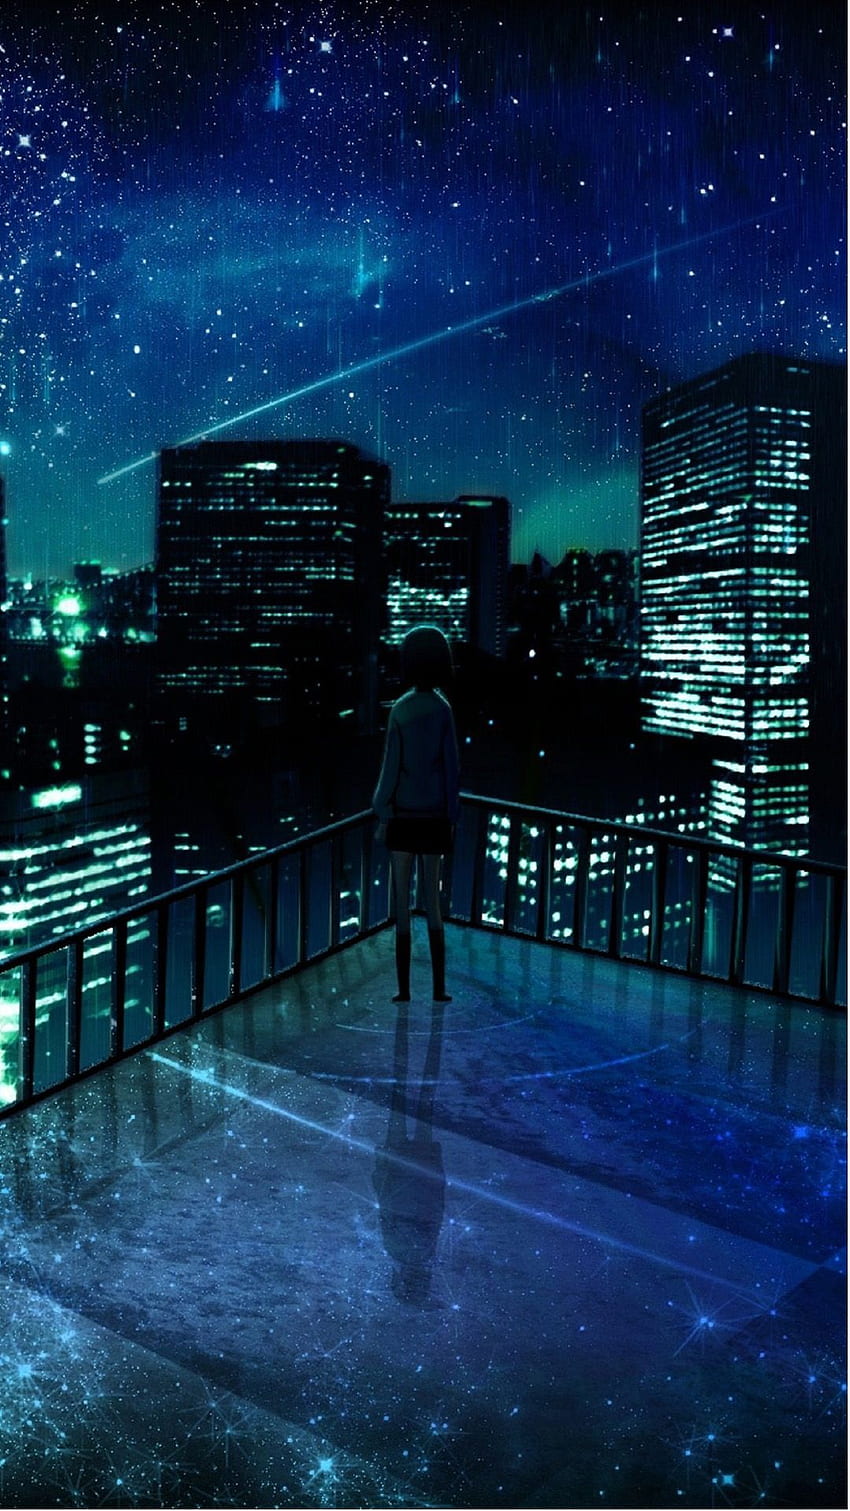 Anime Scenery At Night wallpaper  Anime scenery Night scenery Dark  landscape